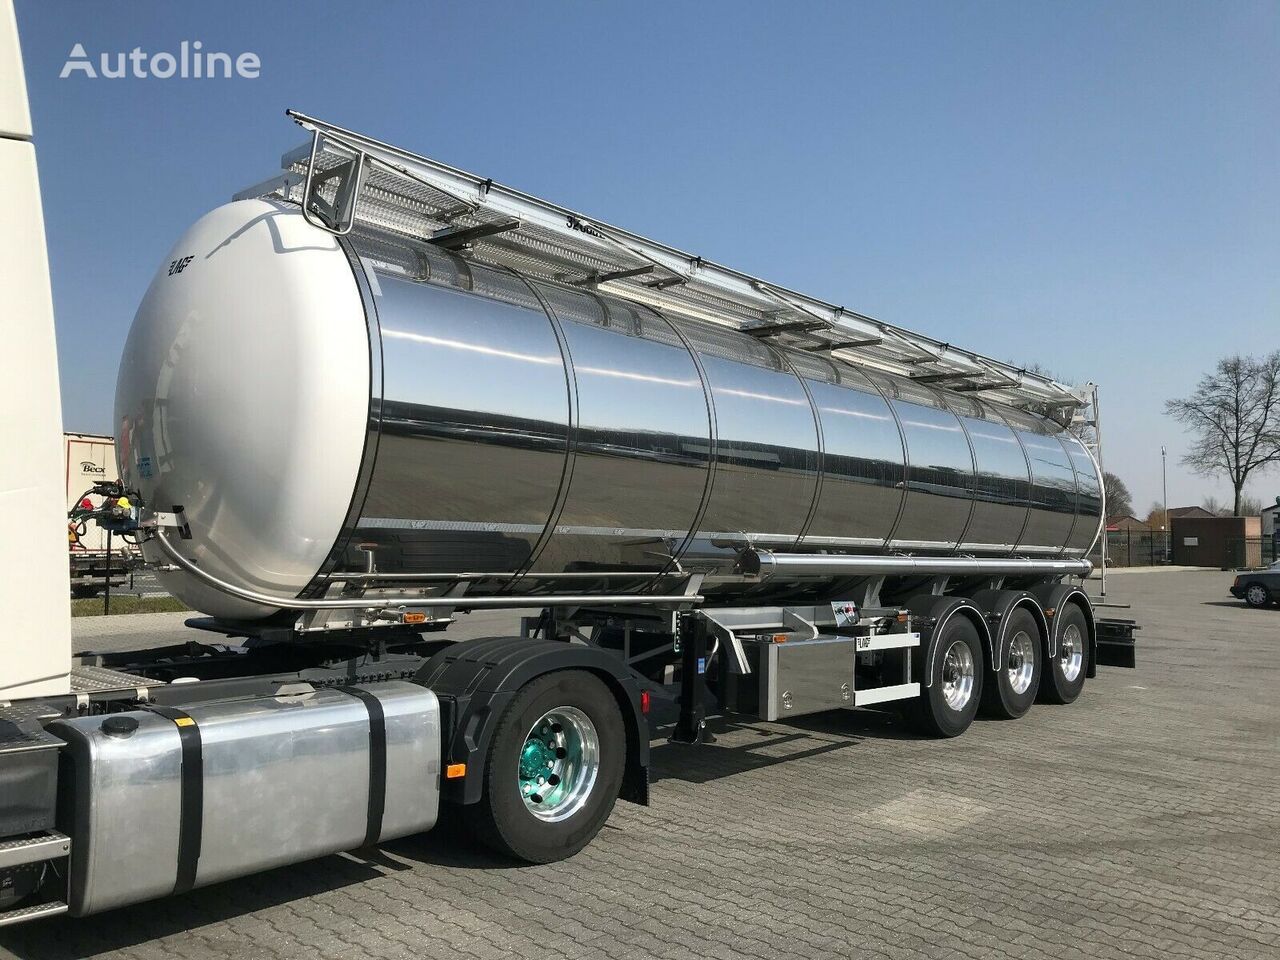 LAG 2xDRUCKTANK-1 KAMMER- 32.000 liter food tank